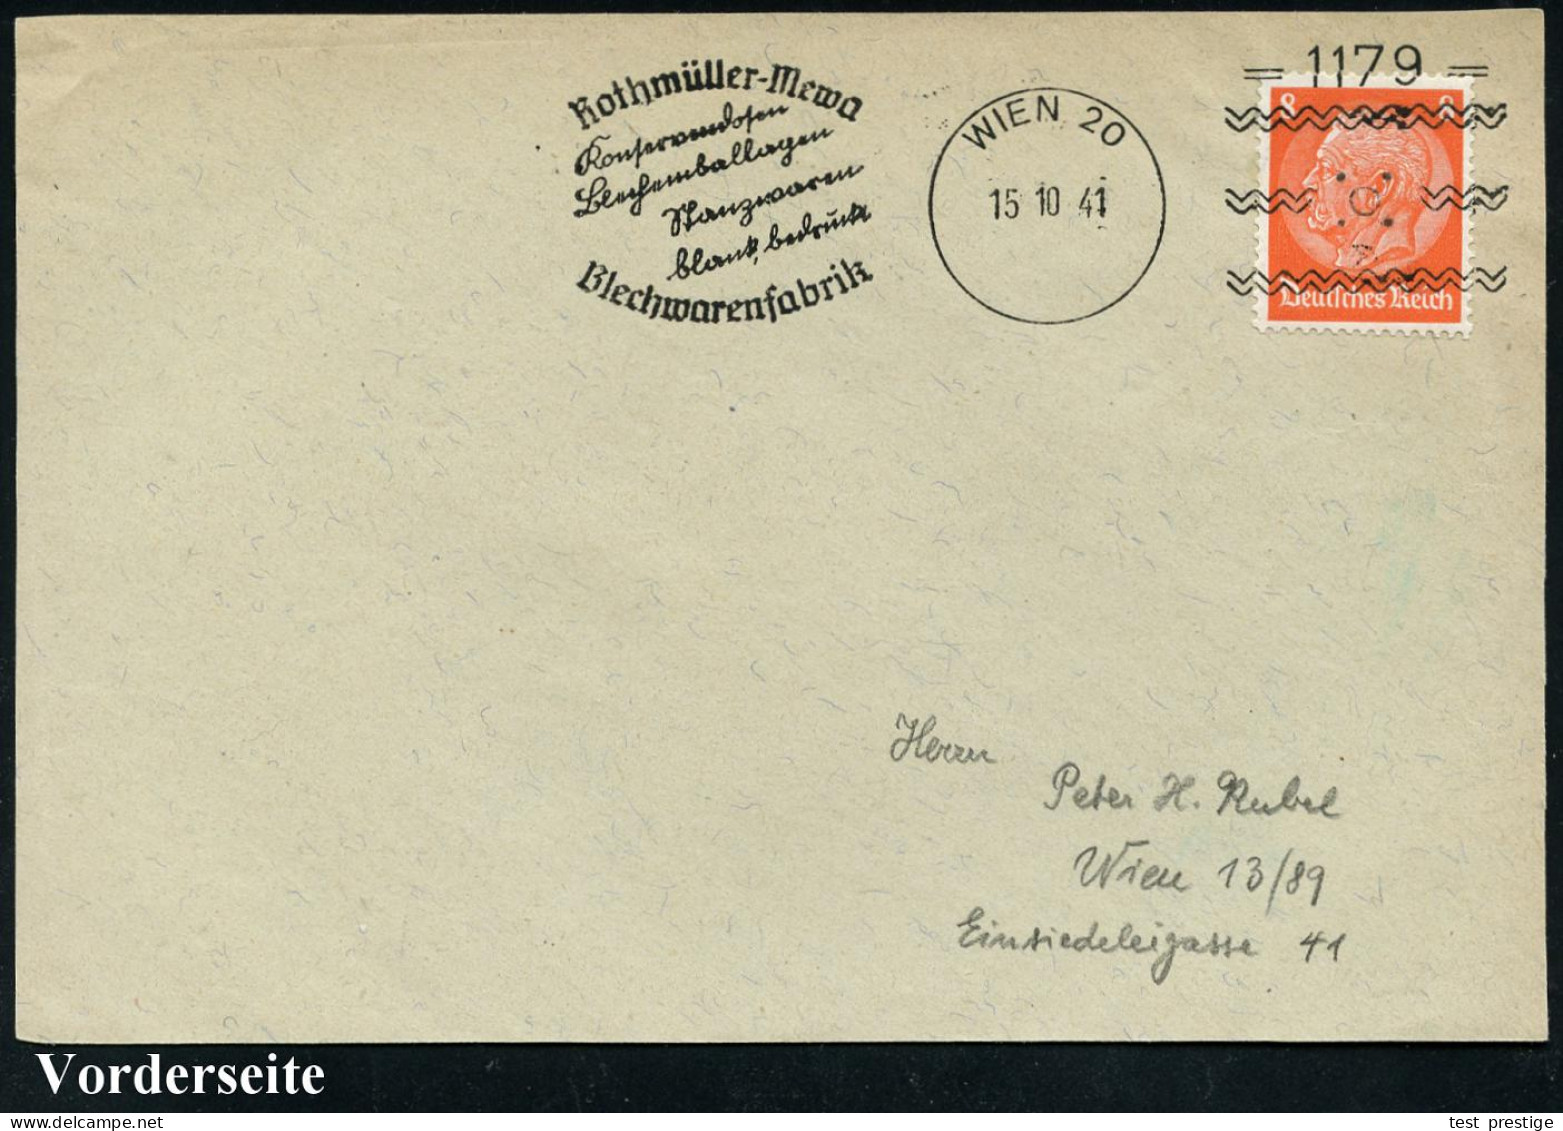 WIEN 20/ =1179=/ Rothmüller-Mewa/ Konservendosen/ ..Stanzwaren/ Blank,bedruckt/ Blechwarenfabrik 1941 (15.10.) Seltener  - Other